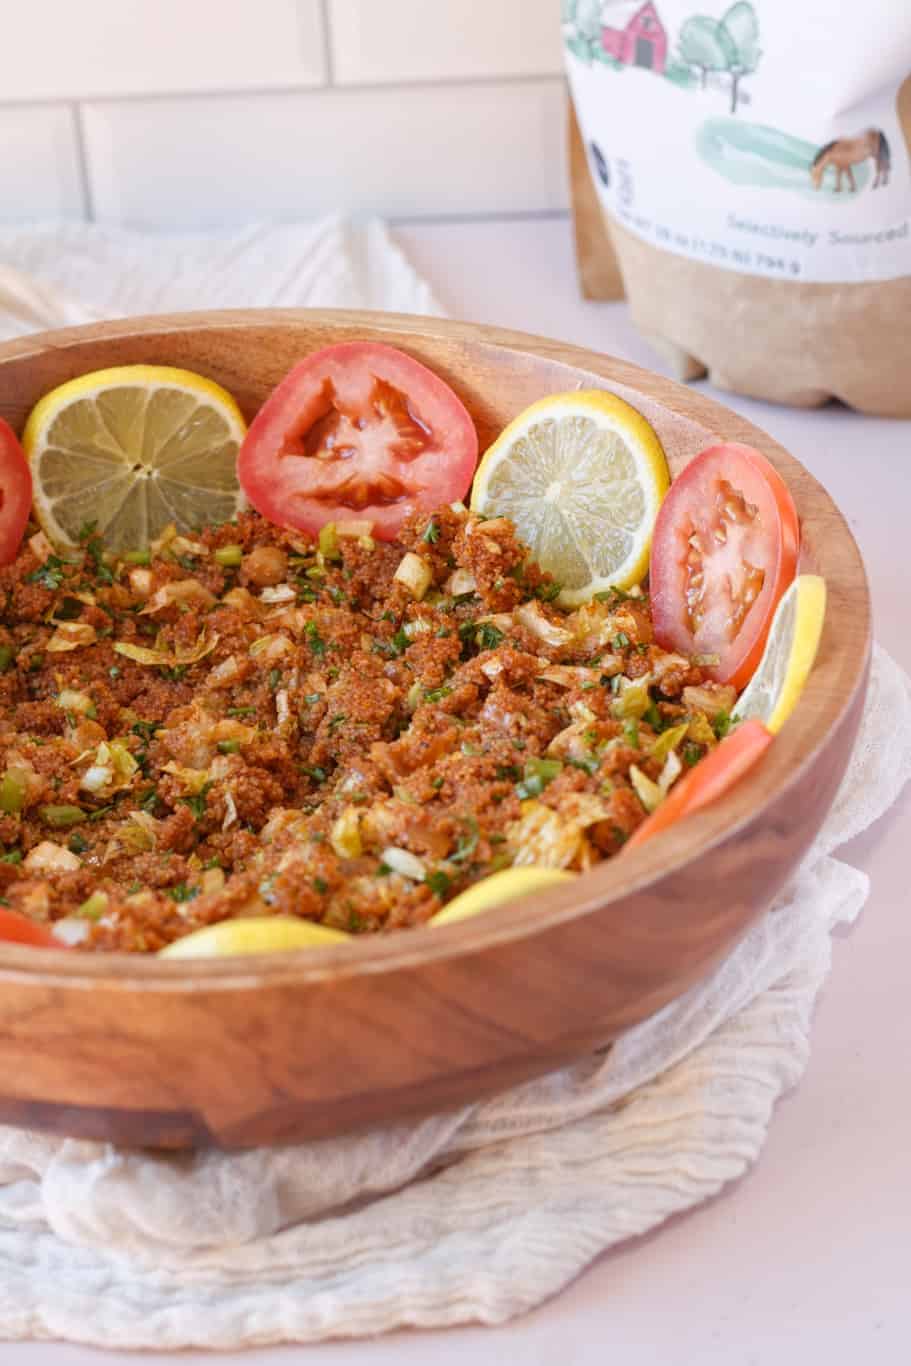 A bowl of Turkish Kisir Salad garnished with lemon and tomato slices.